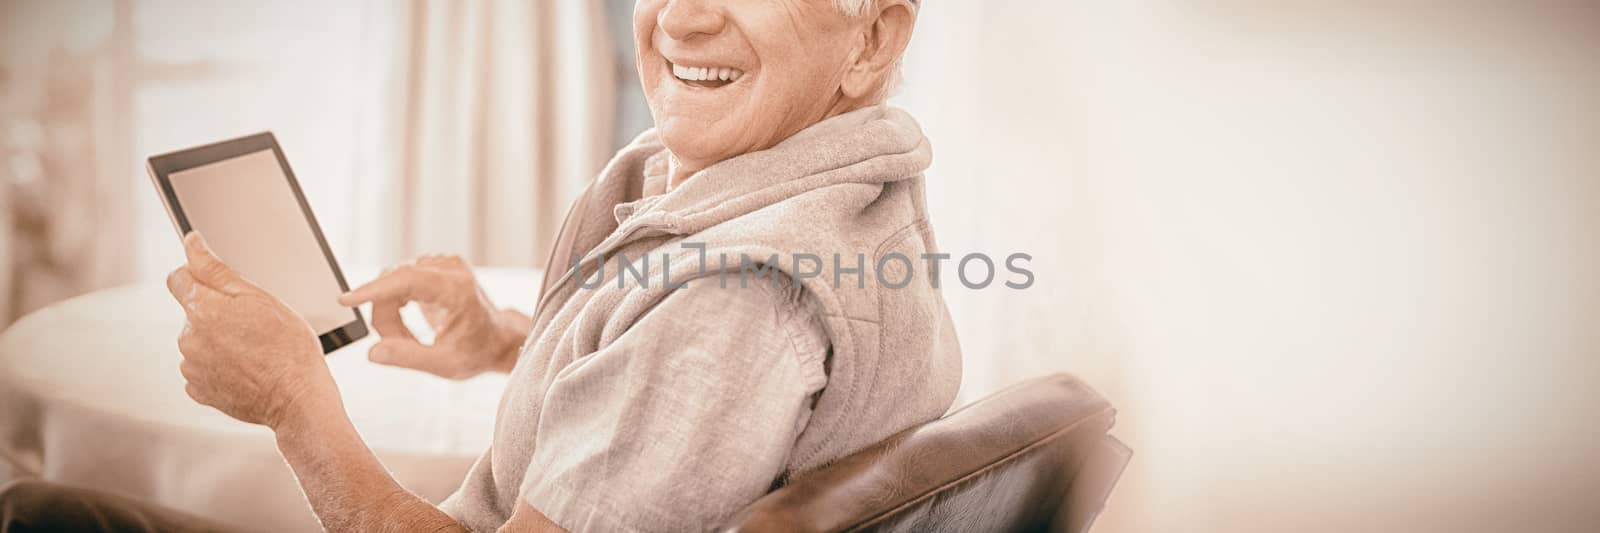 Senior man using digital tablet by Wavebreakmedia